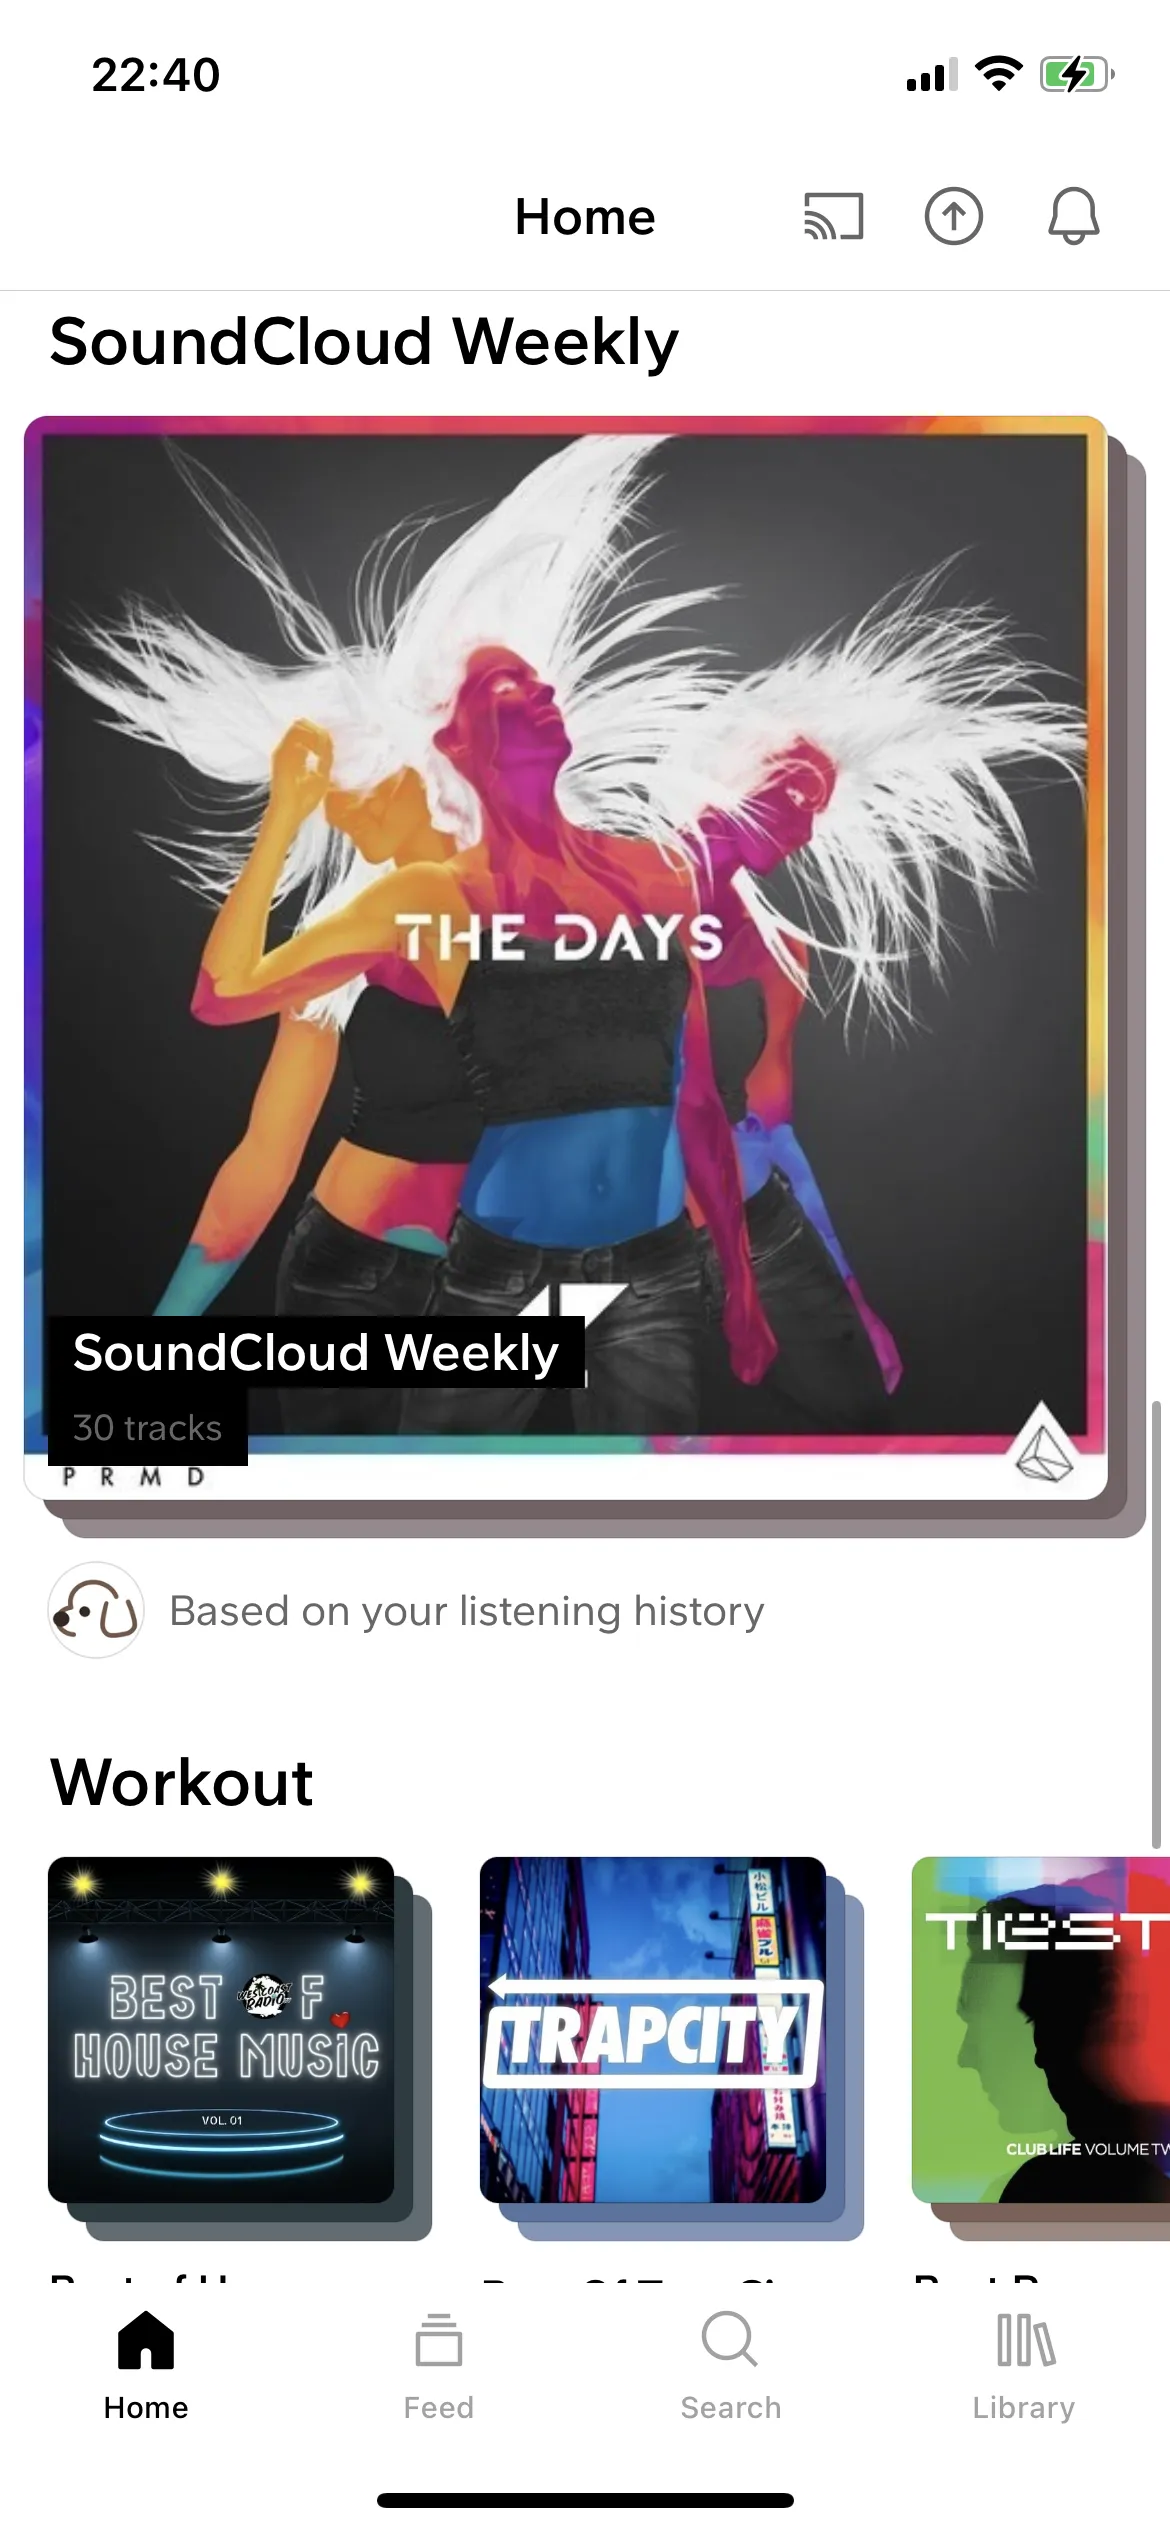 SoundCloud Home screen